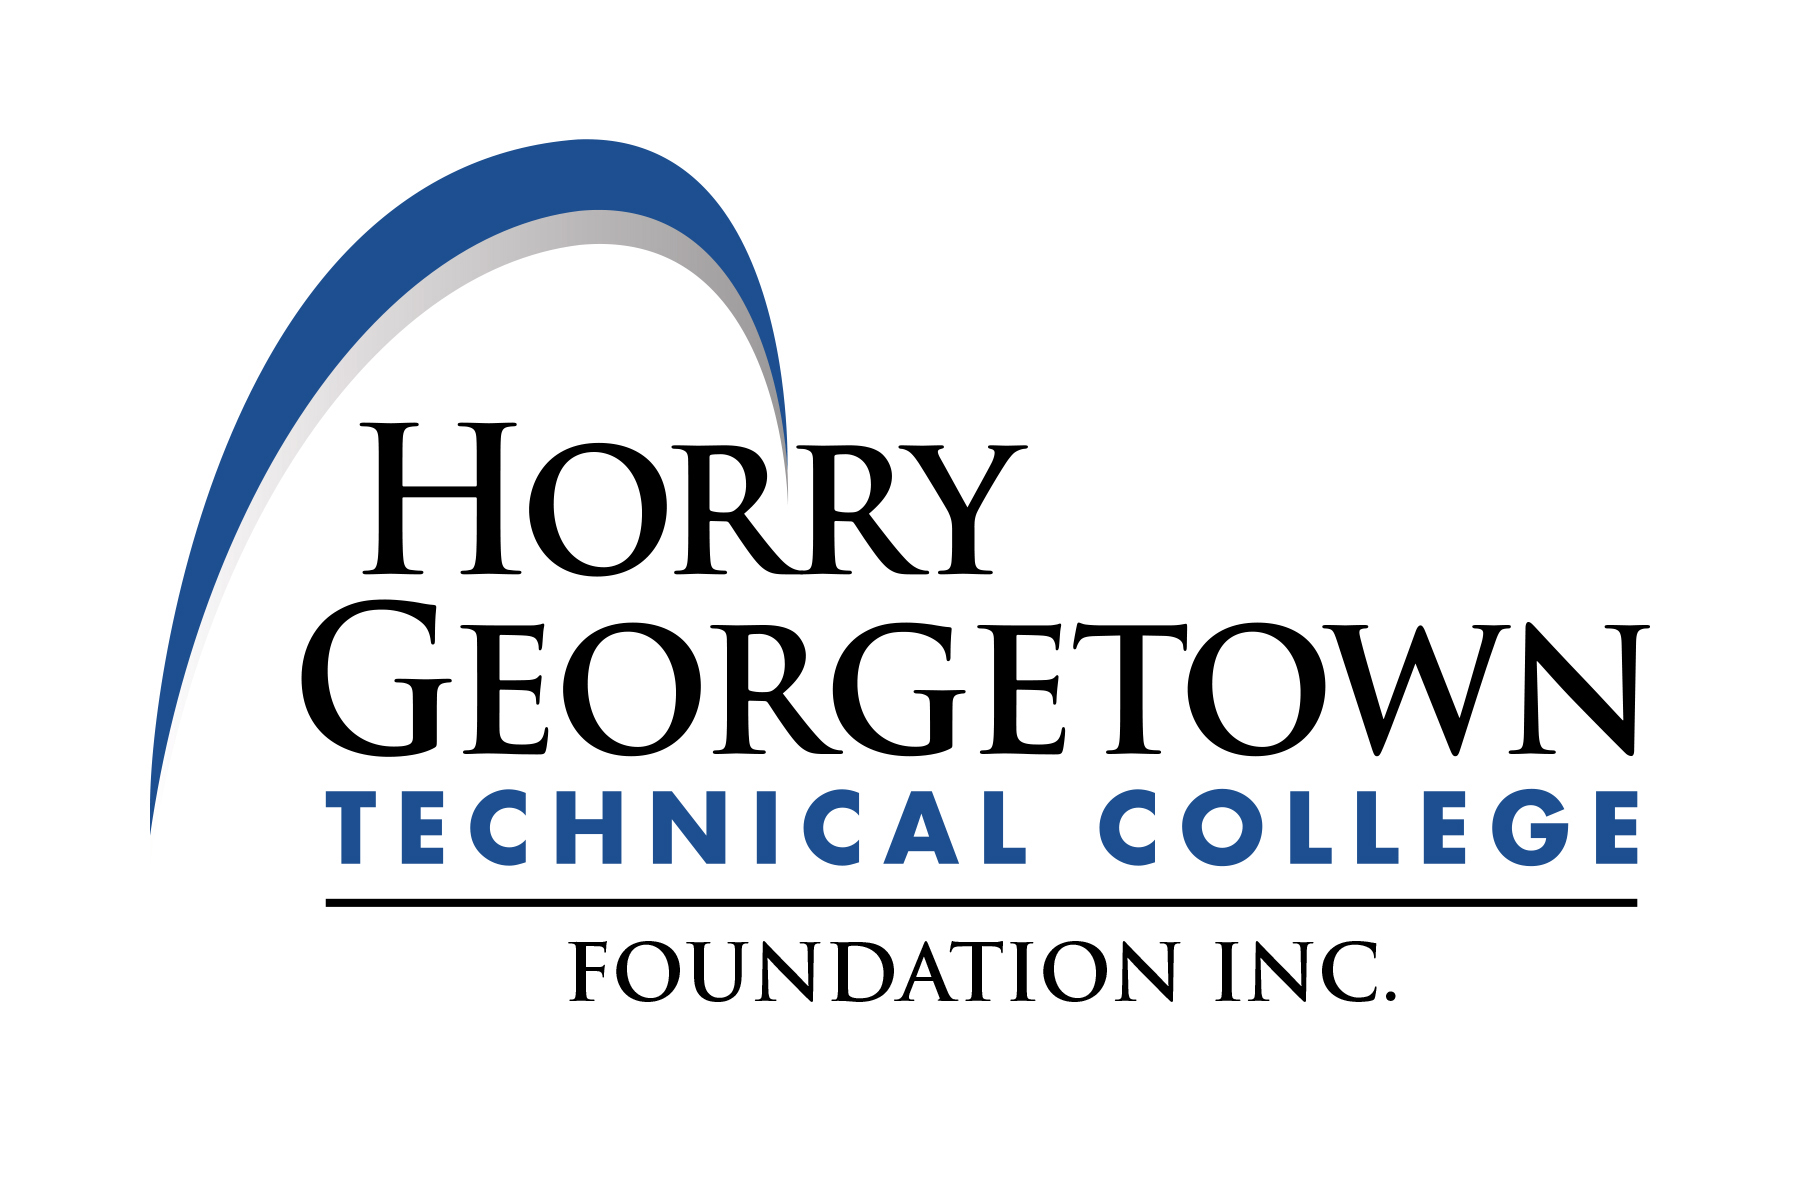 HGTC Foundation